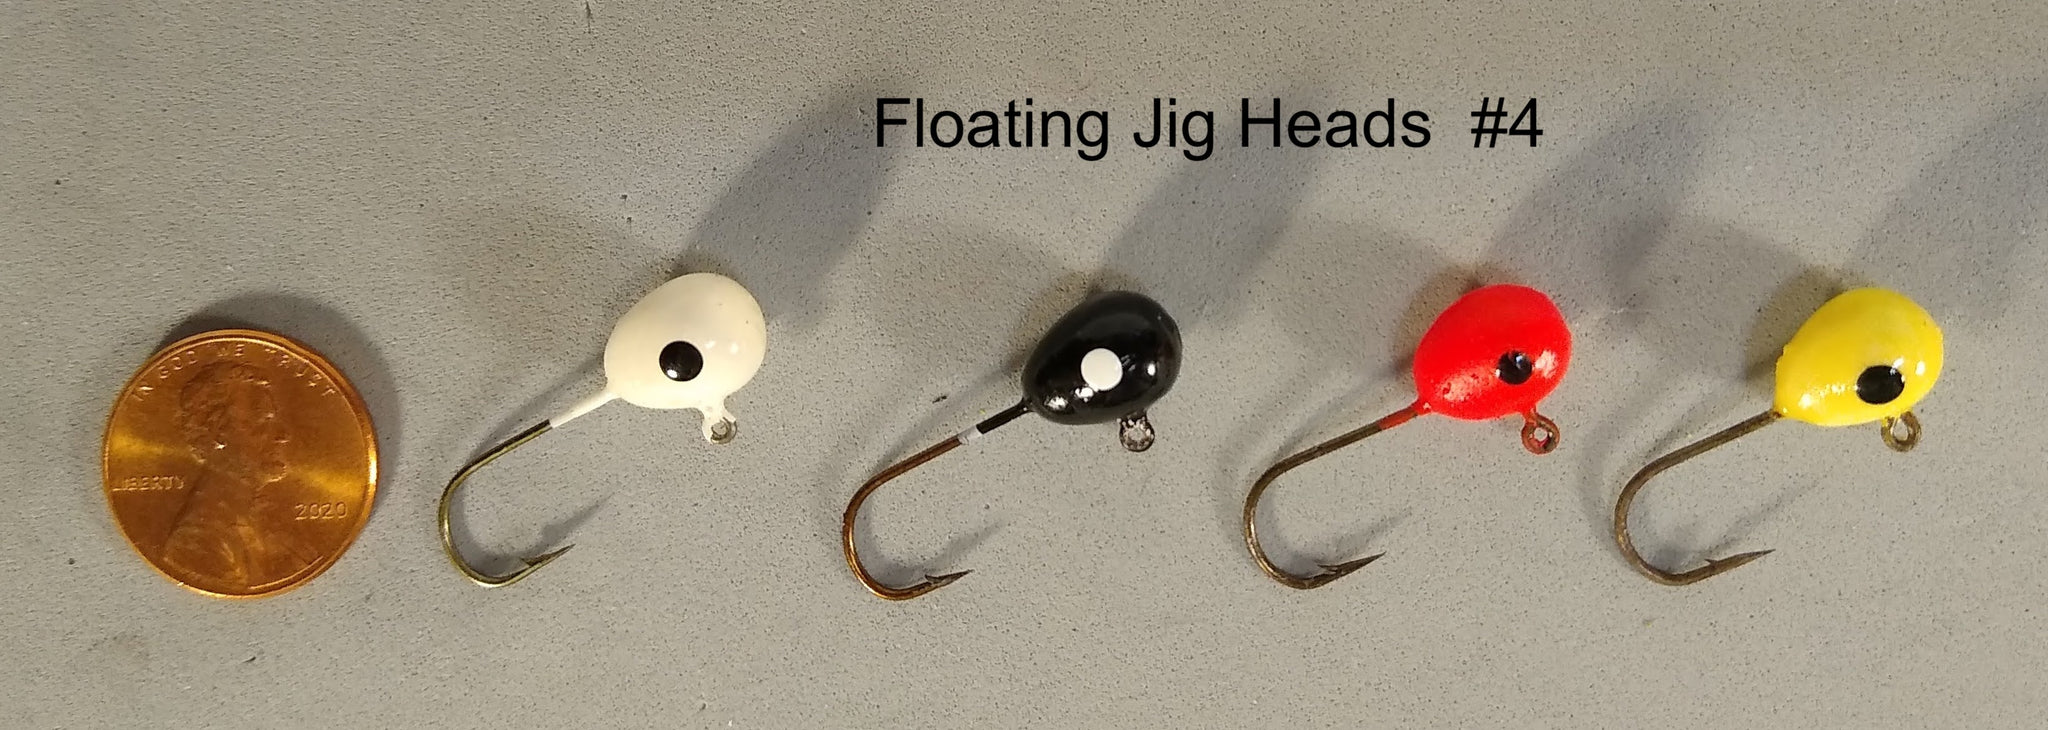 Mr. Twister Floating Jig Heads #4